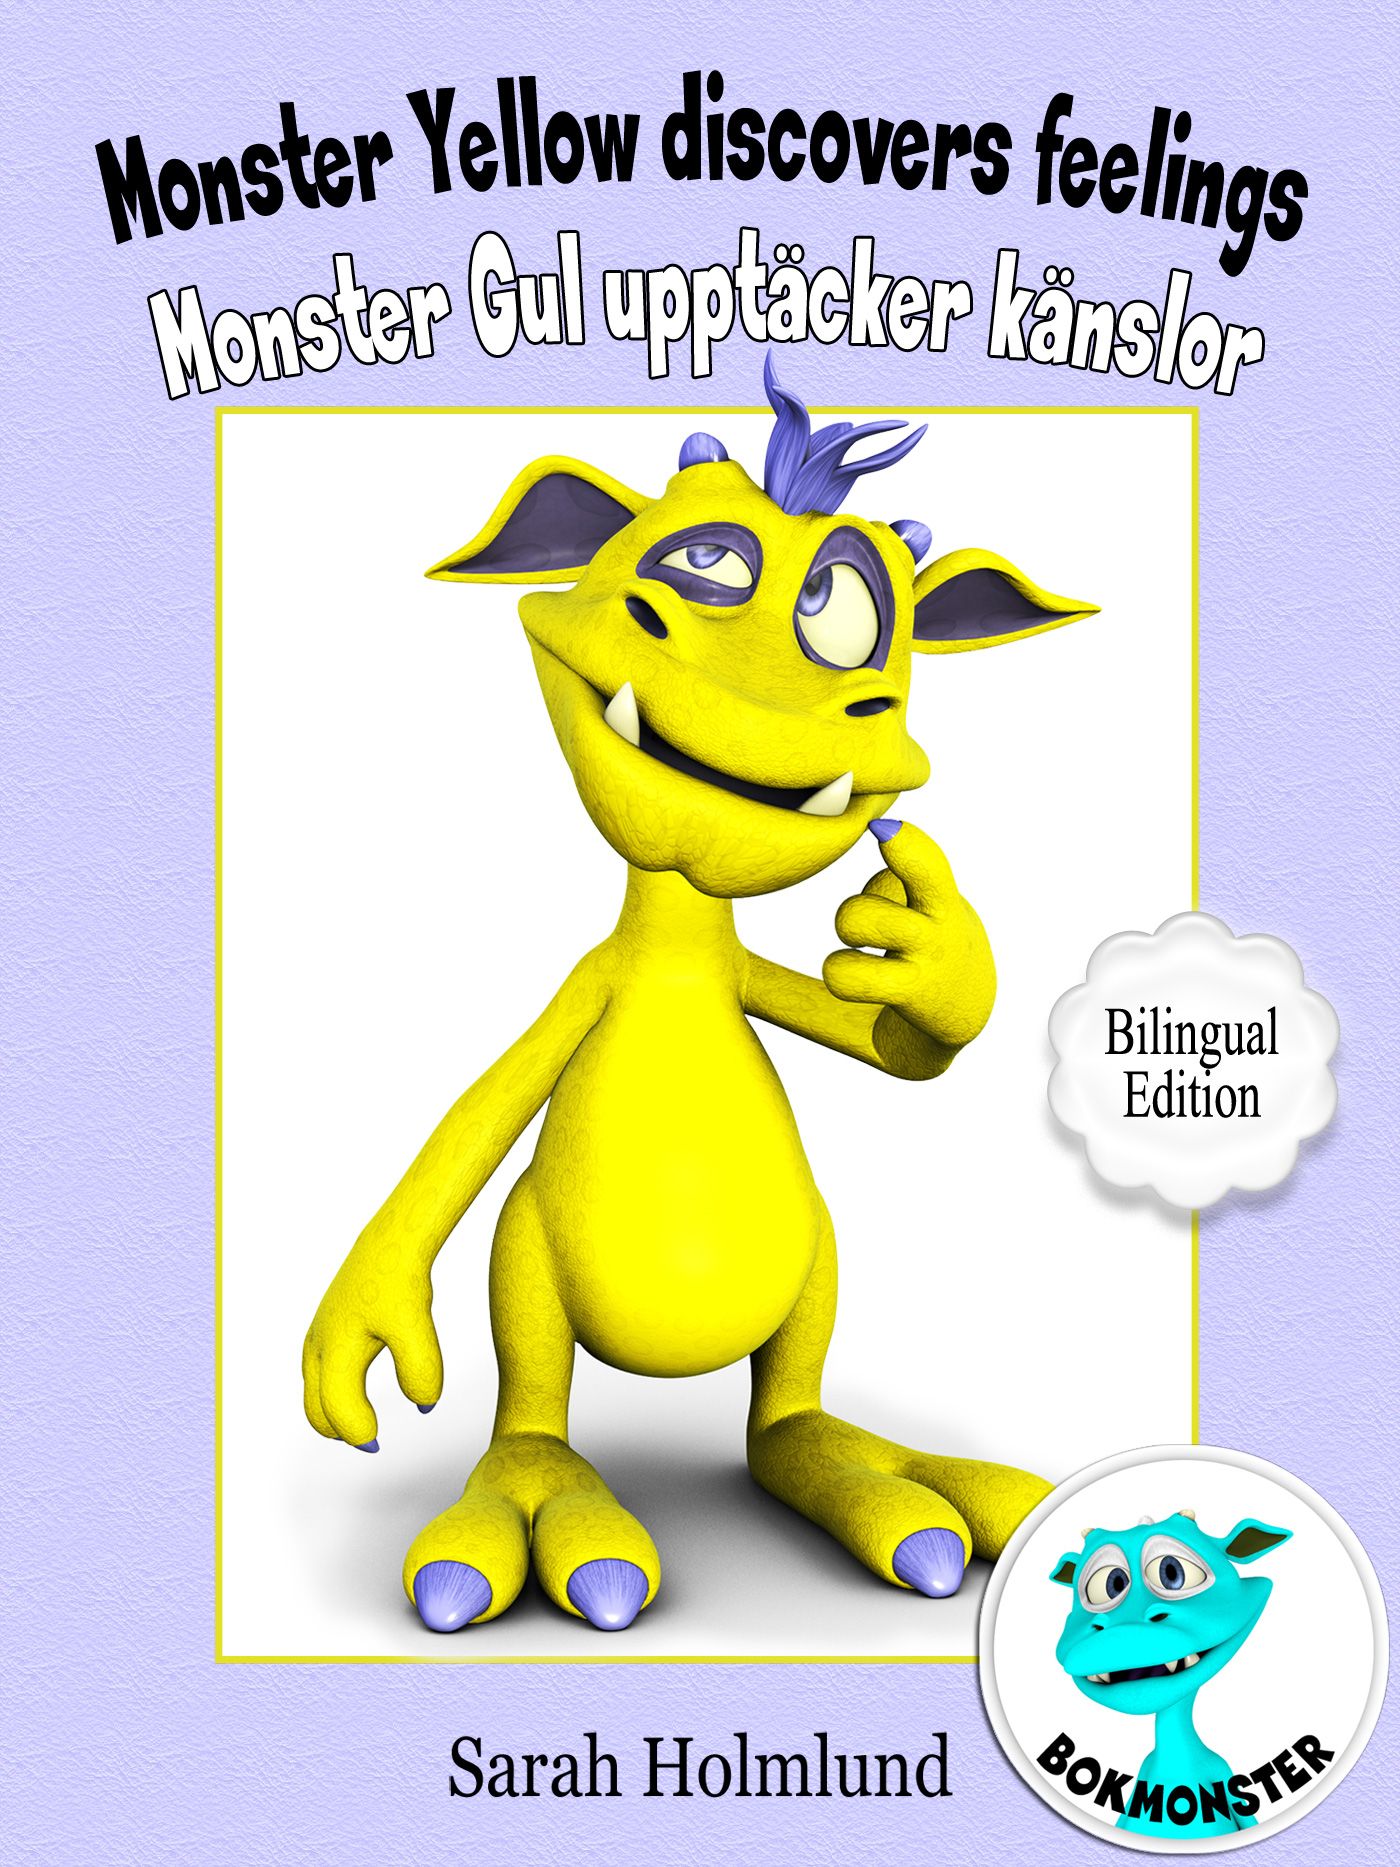 Monster Yellow discovers feelings - Monster Gul upptäcker känslor - Bilingual Edition, eBook by Sarah Holmlund